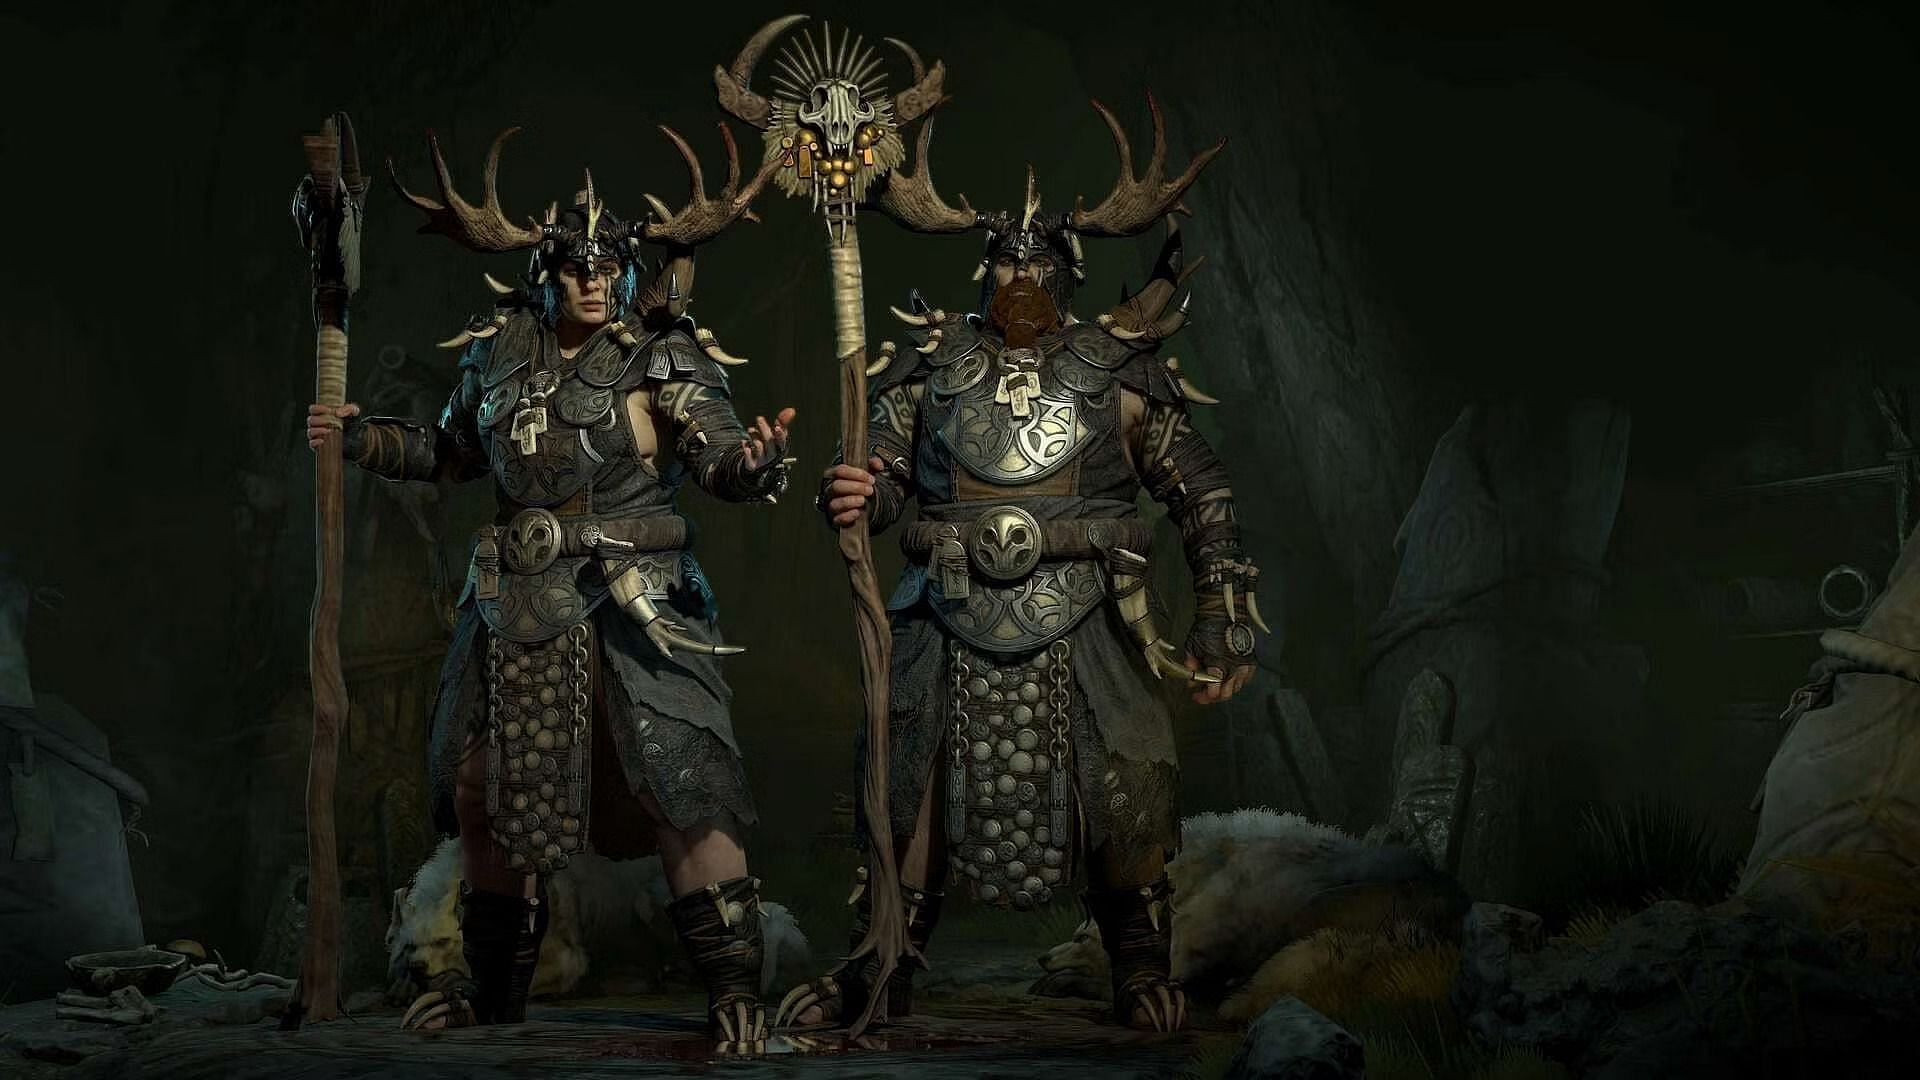 Two Druid characters in Diablo 4.